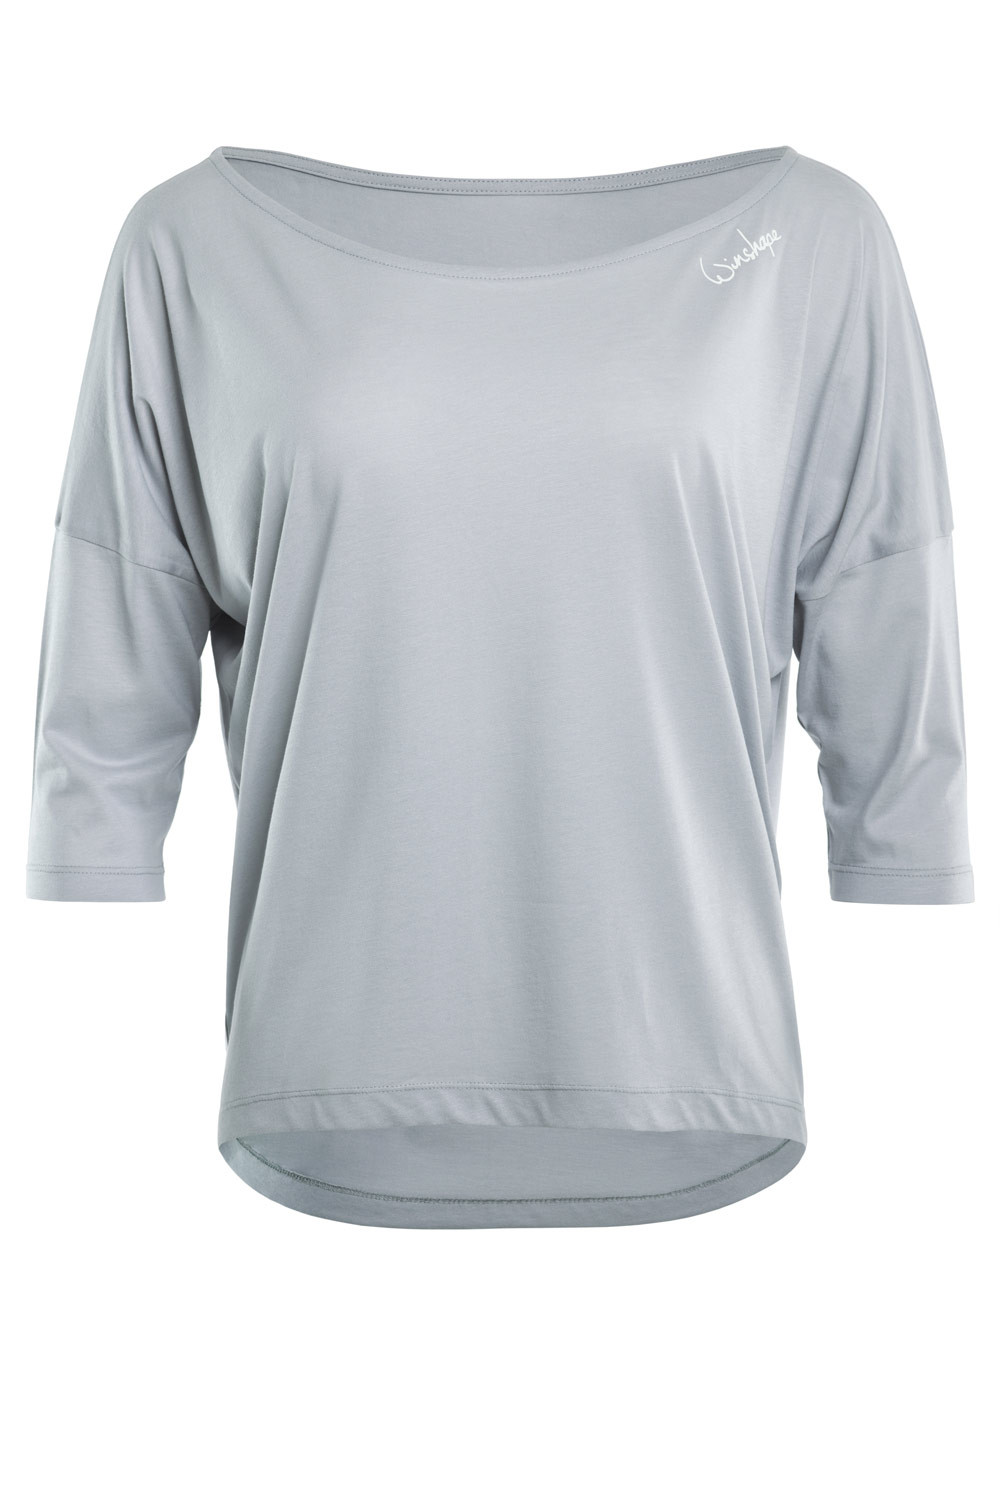 Ultra leichtes Modal-3/4-Arm Shirt MCS001, Style Winshape grey, Dance cool